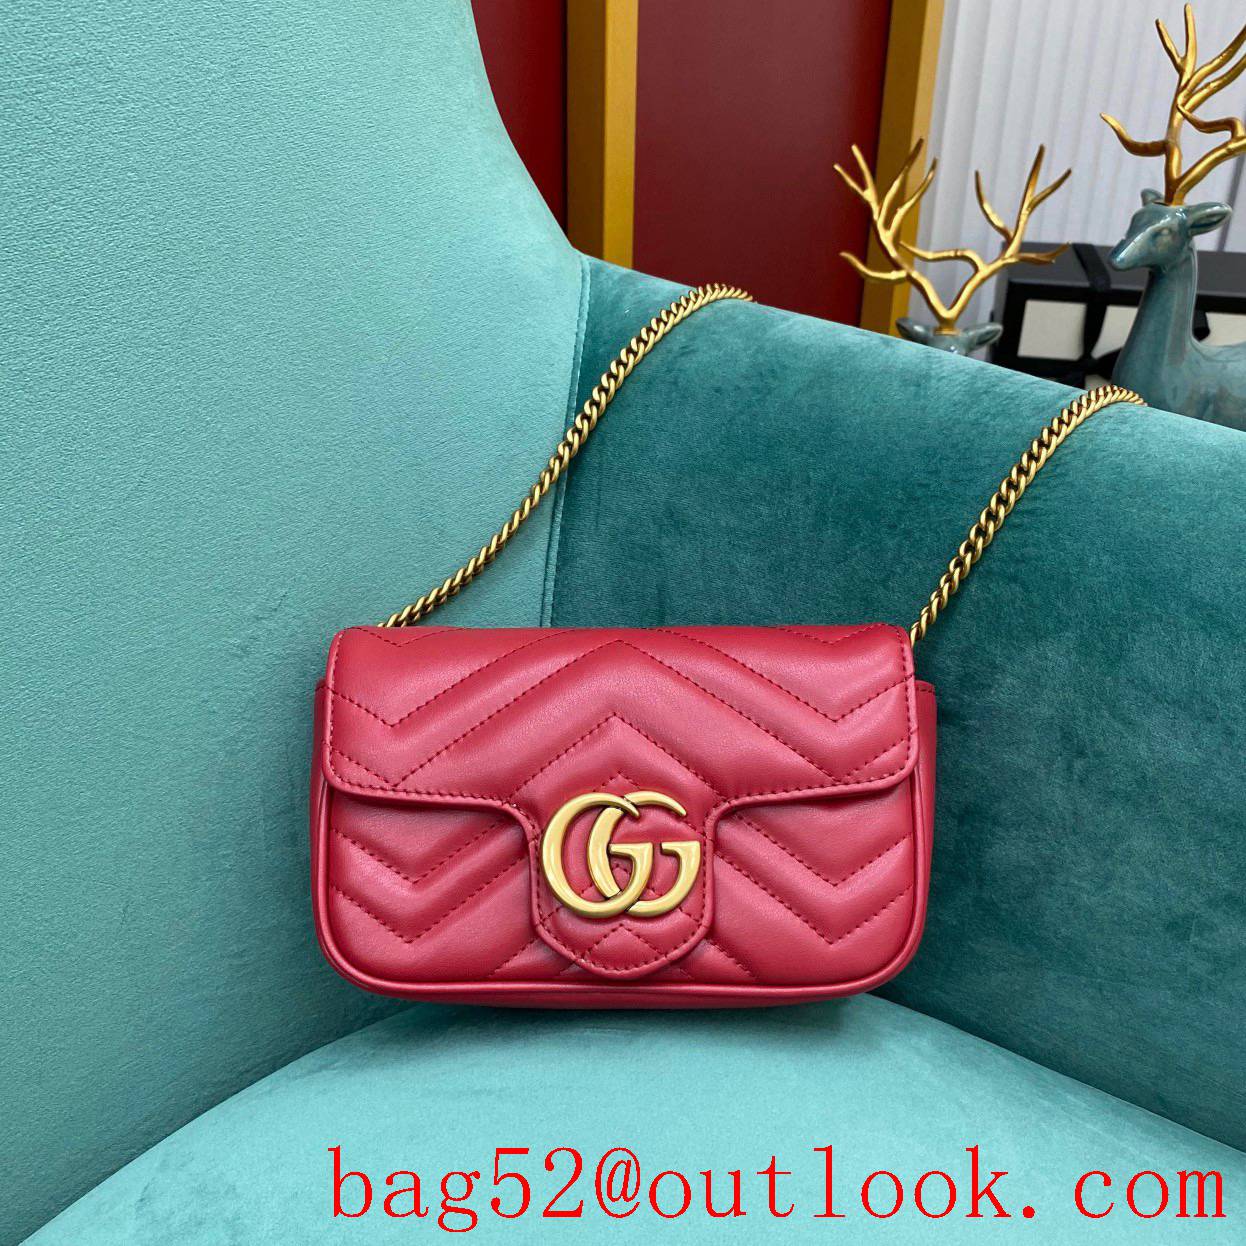 Gucci rose red double GG mini nanomarmont chain shoulder handbag